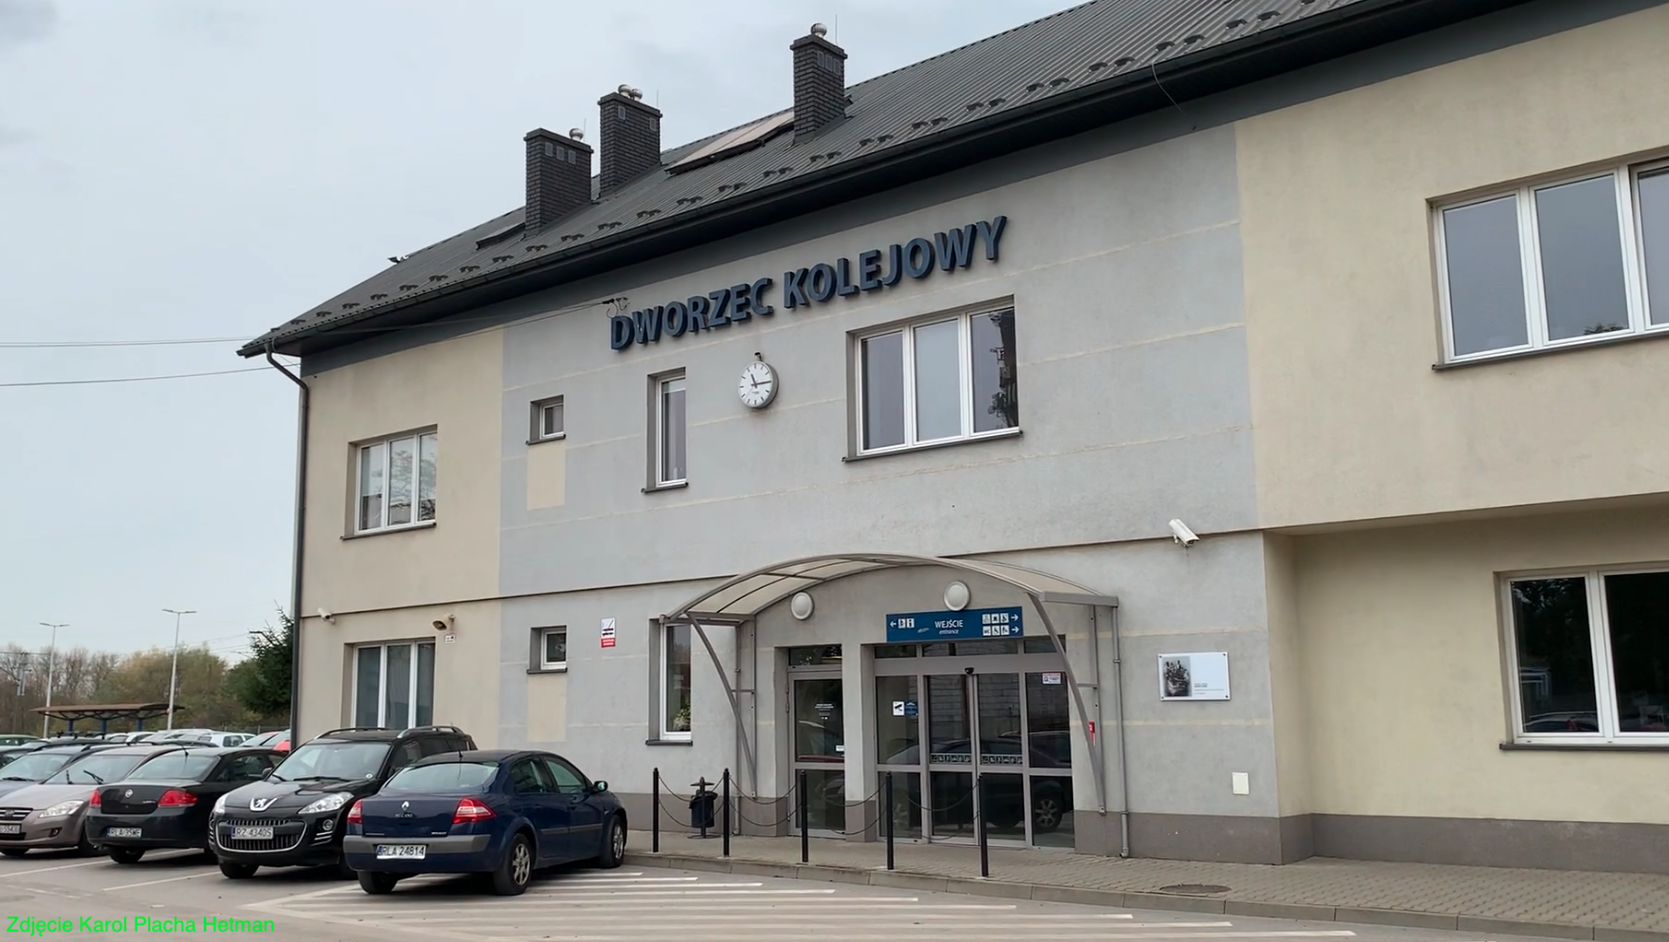 Łańcut railway station. 2023. Photo by Karol Placha Hetman